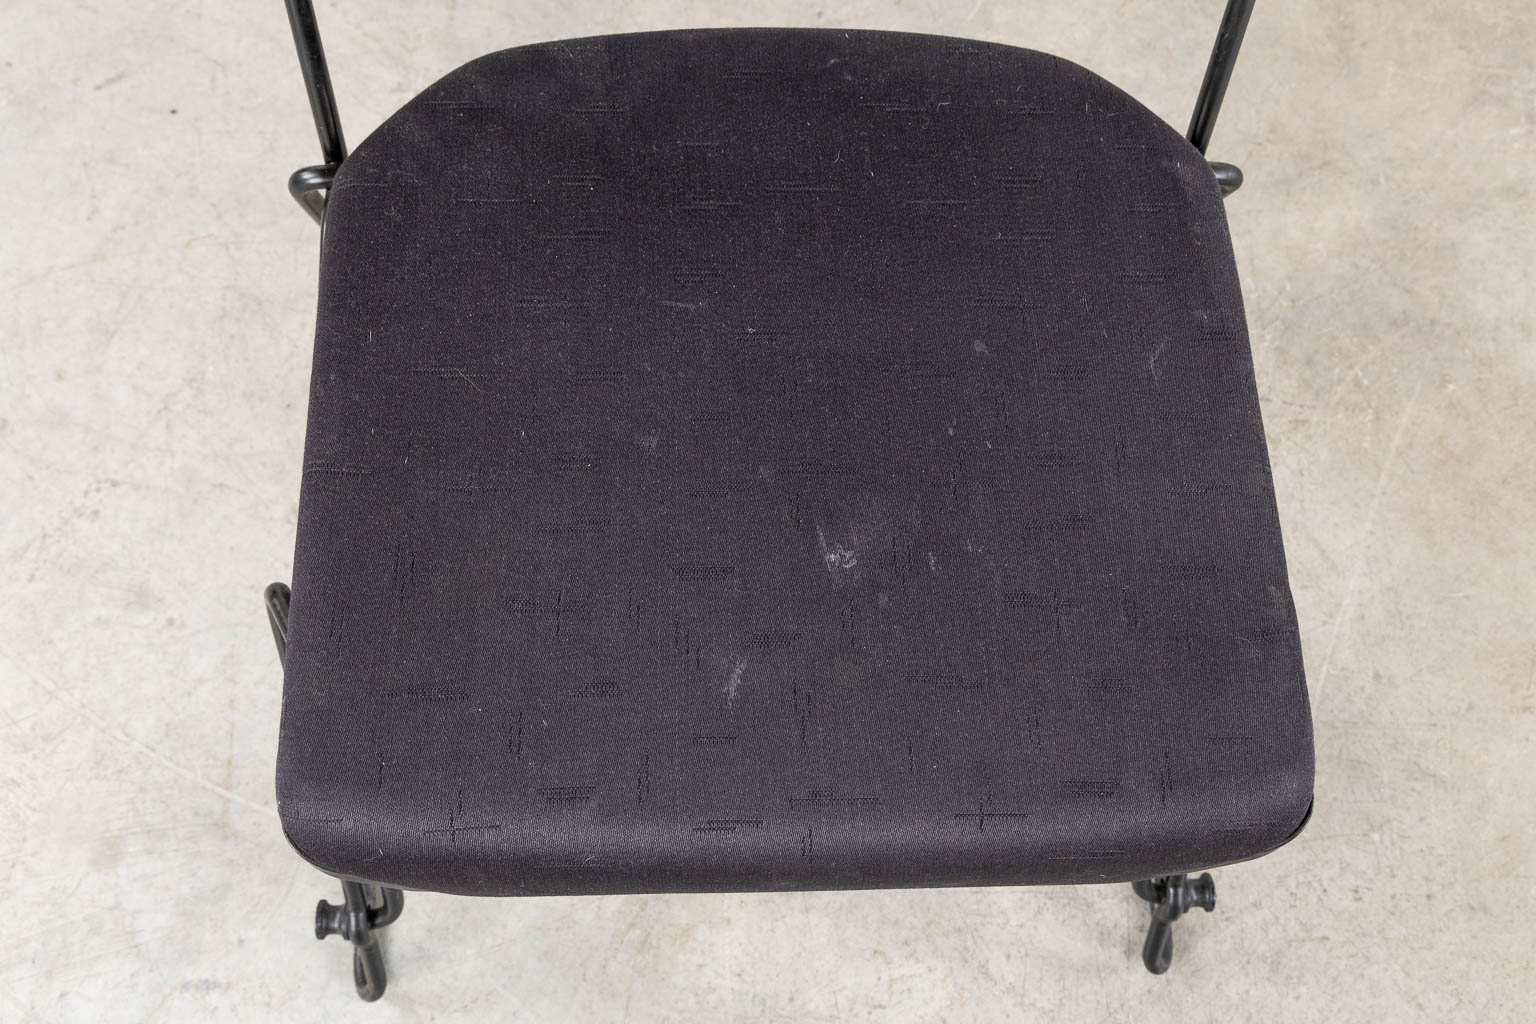 Albert STOLL (XX) Drie stoelen, voor Giroflex. (L:53 x W:53 x H:83 cm)